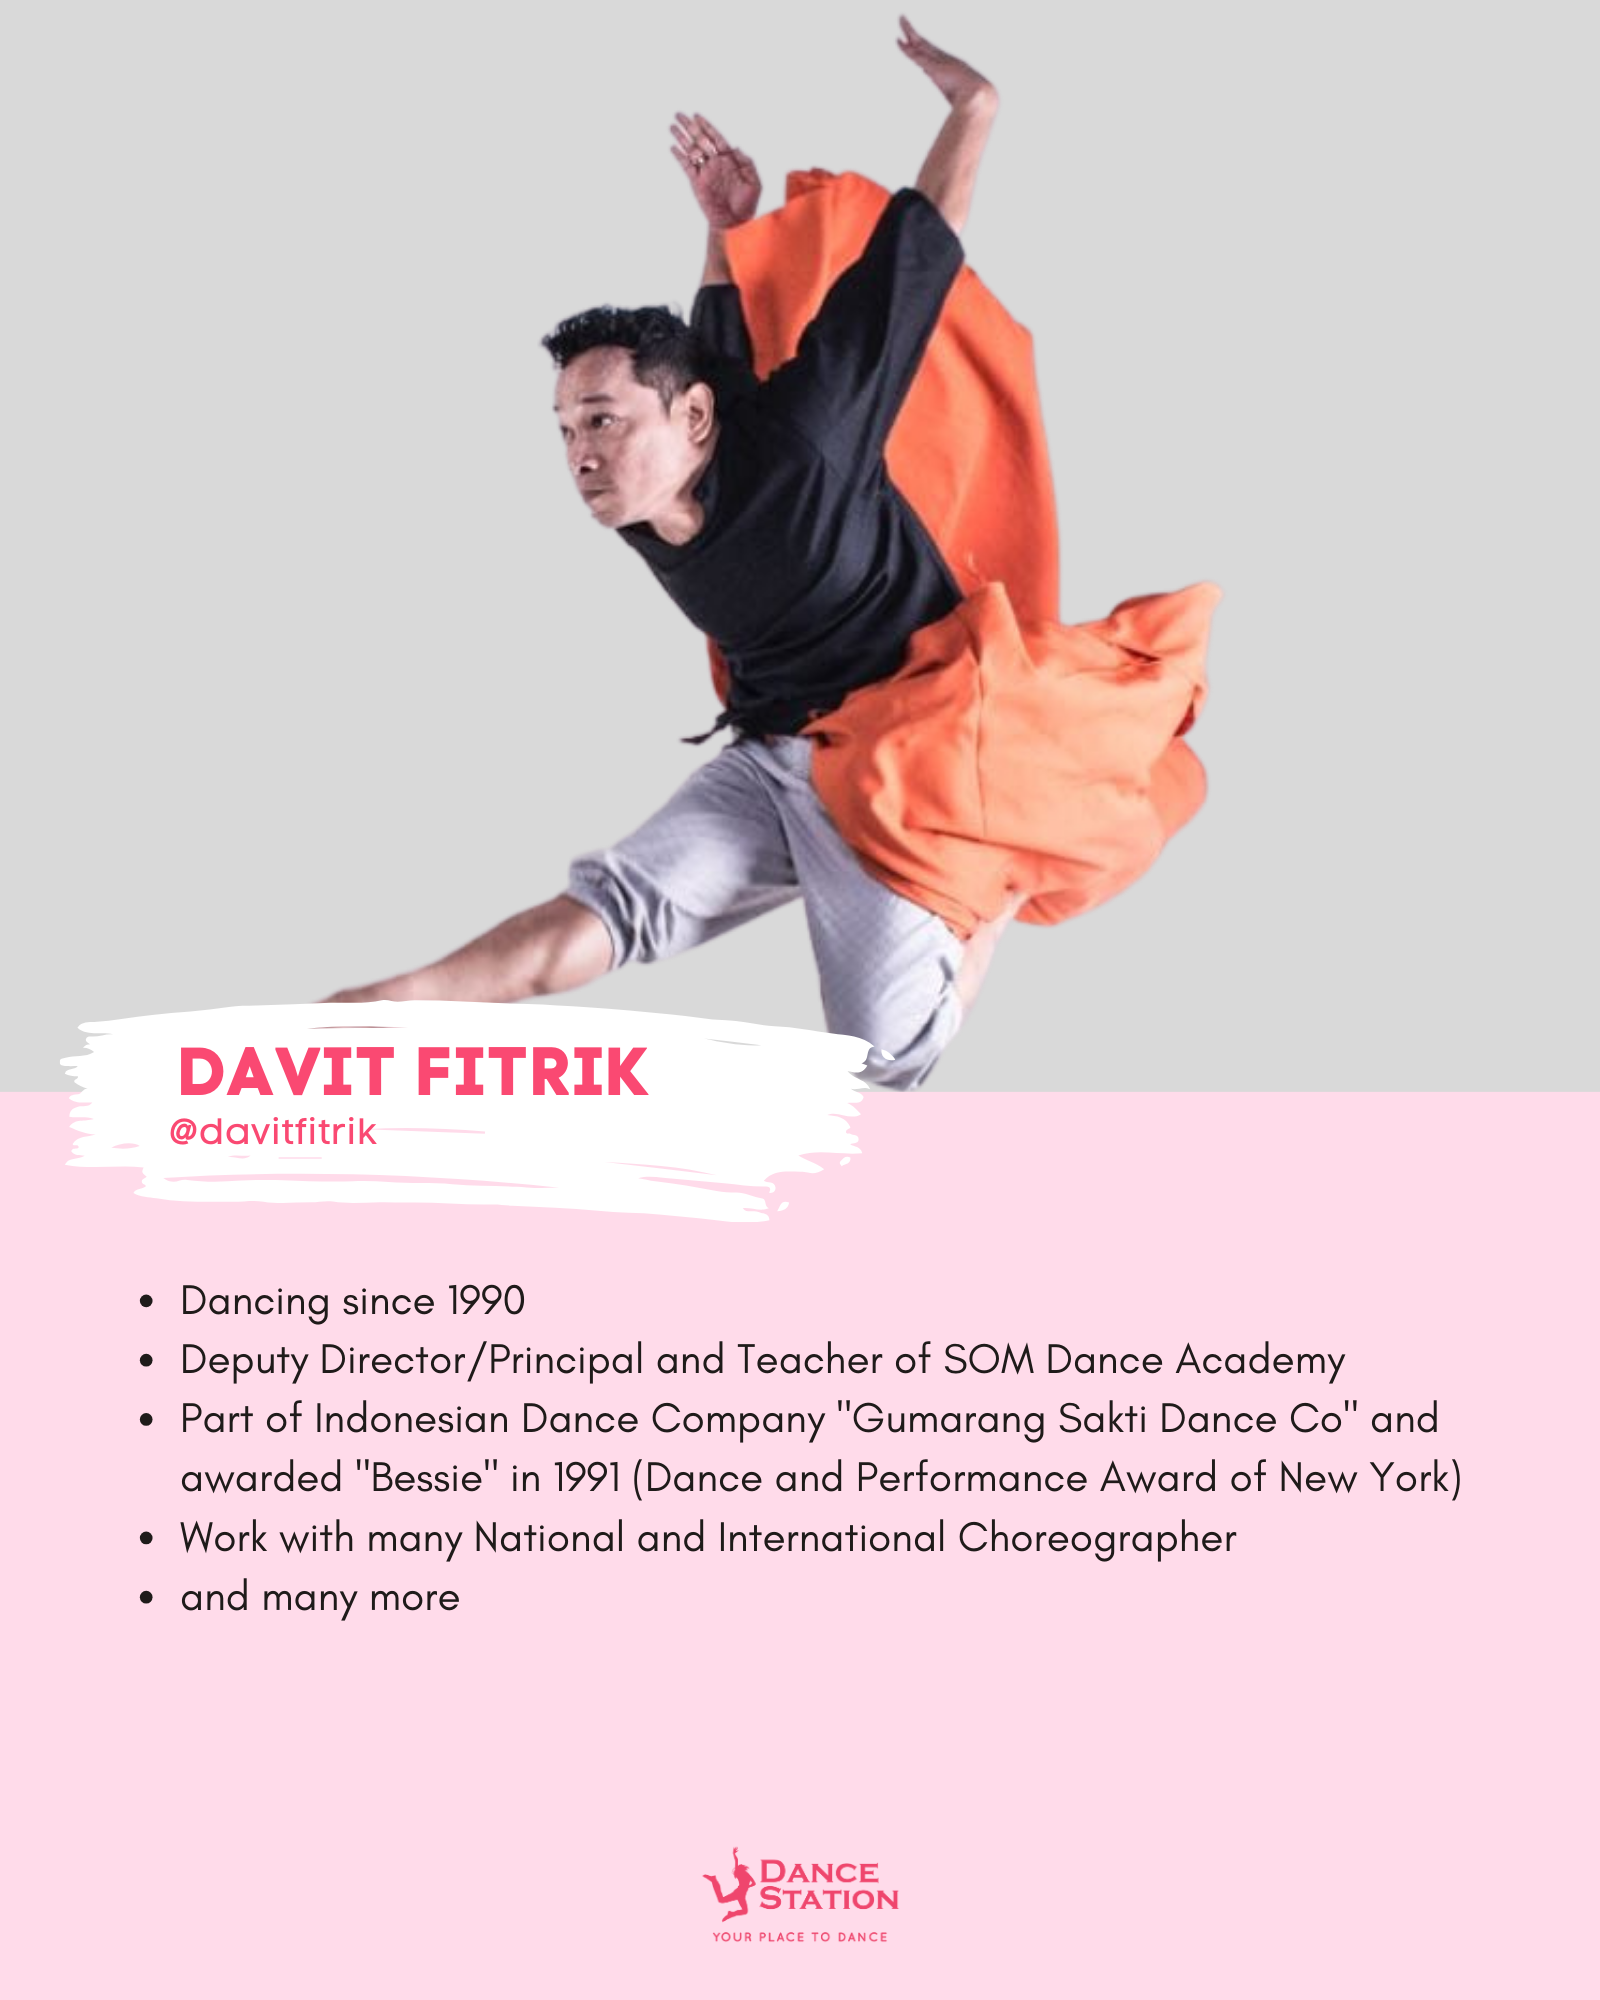 DAVIT FITRIK (MR. Davit)